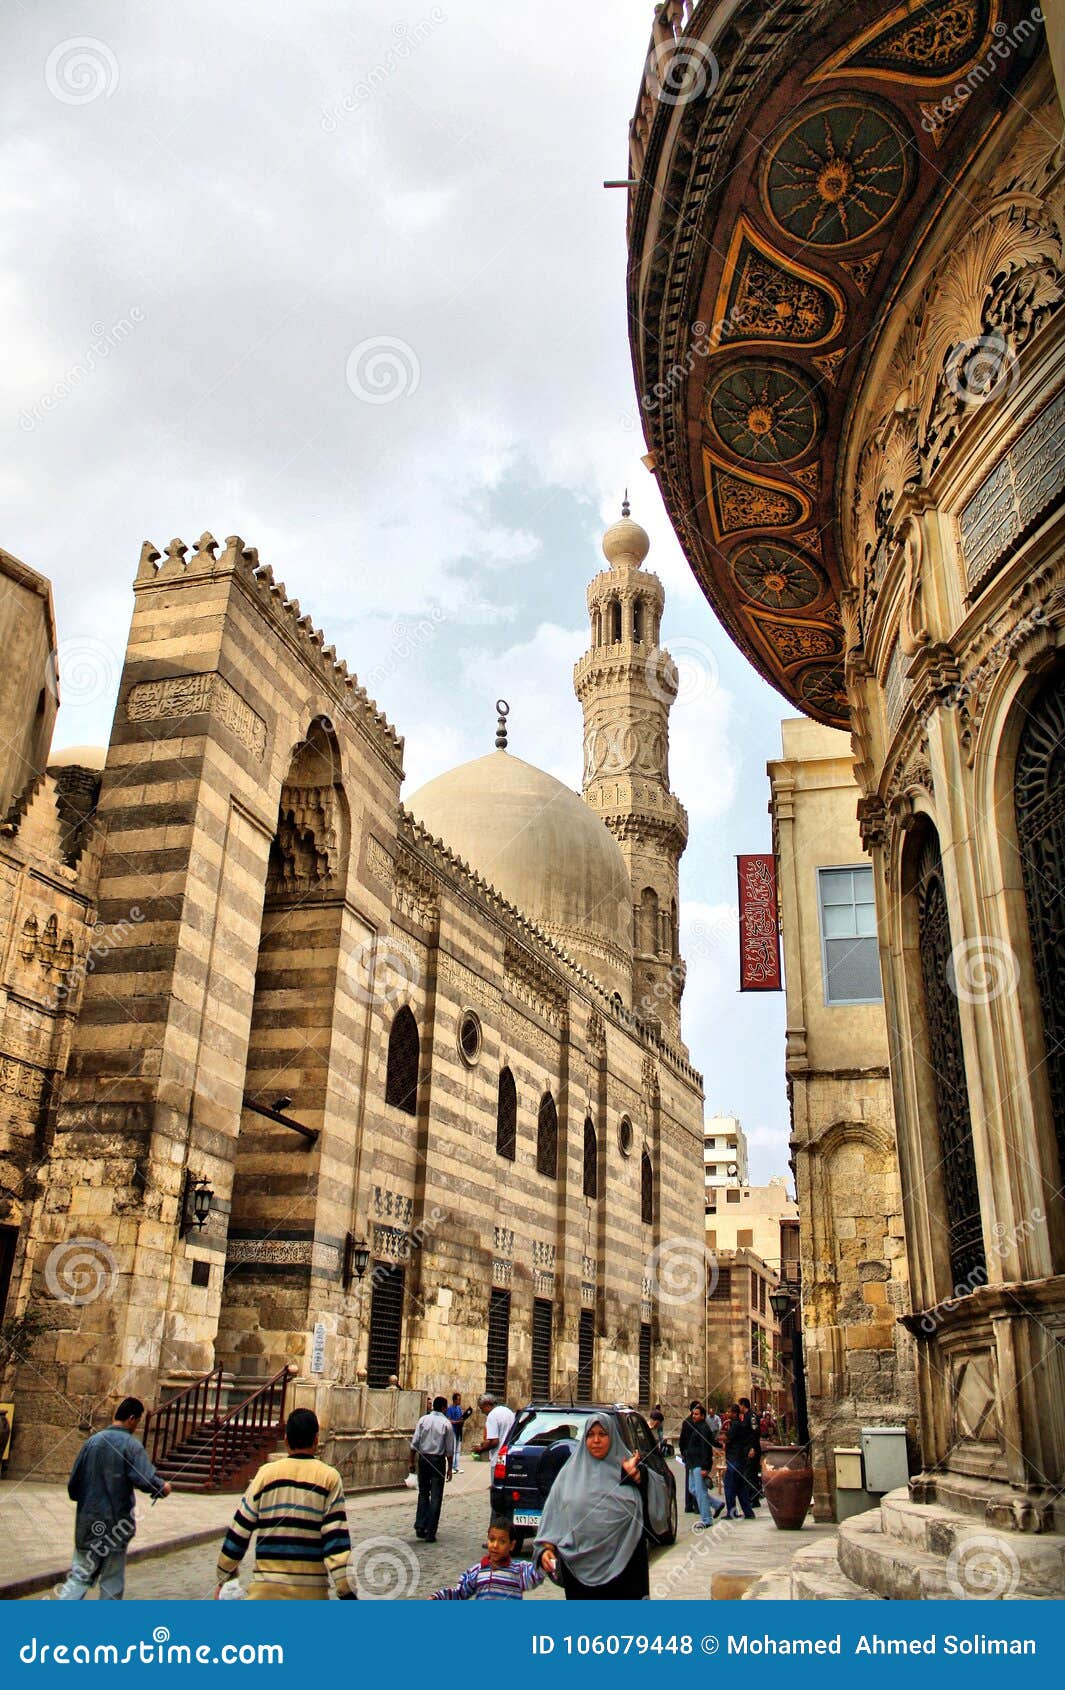 islamic egypt cairo moez street view